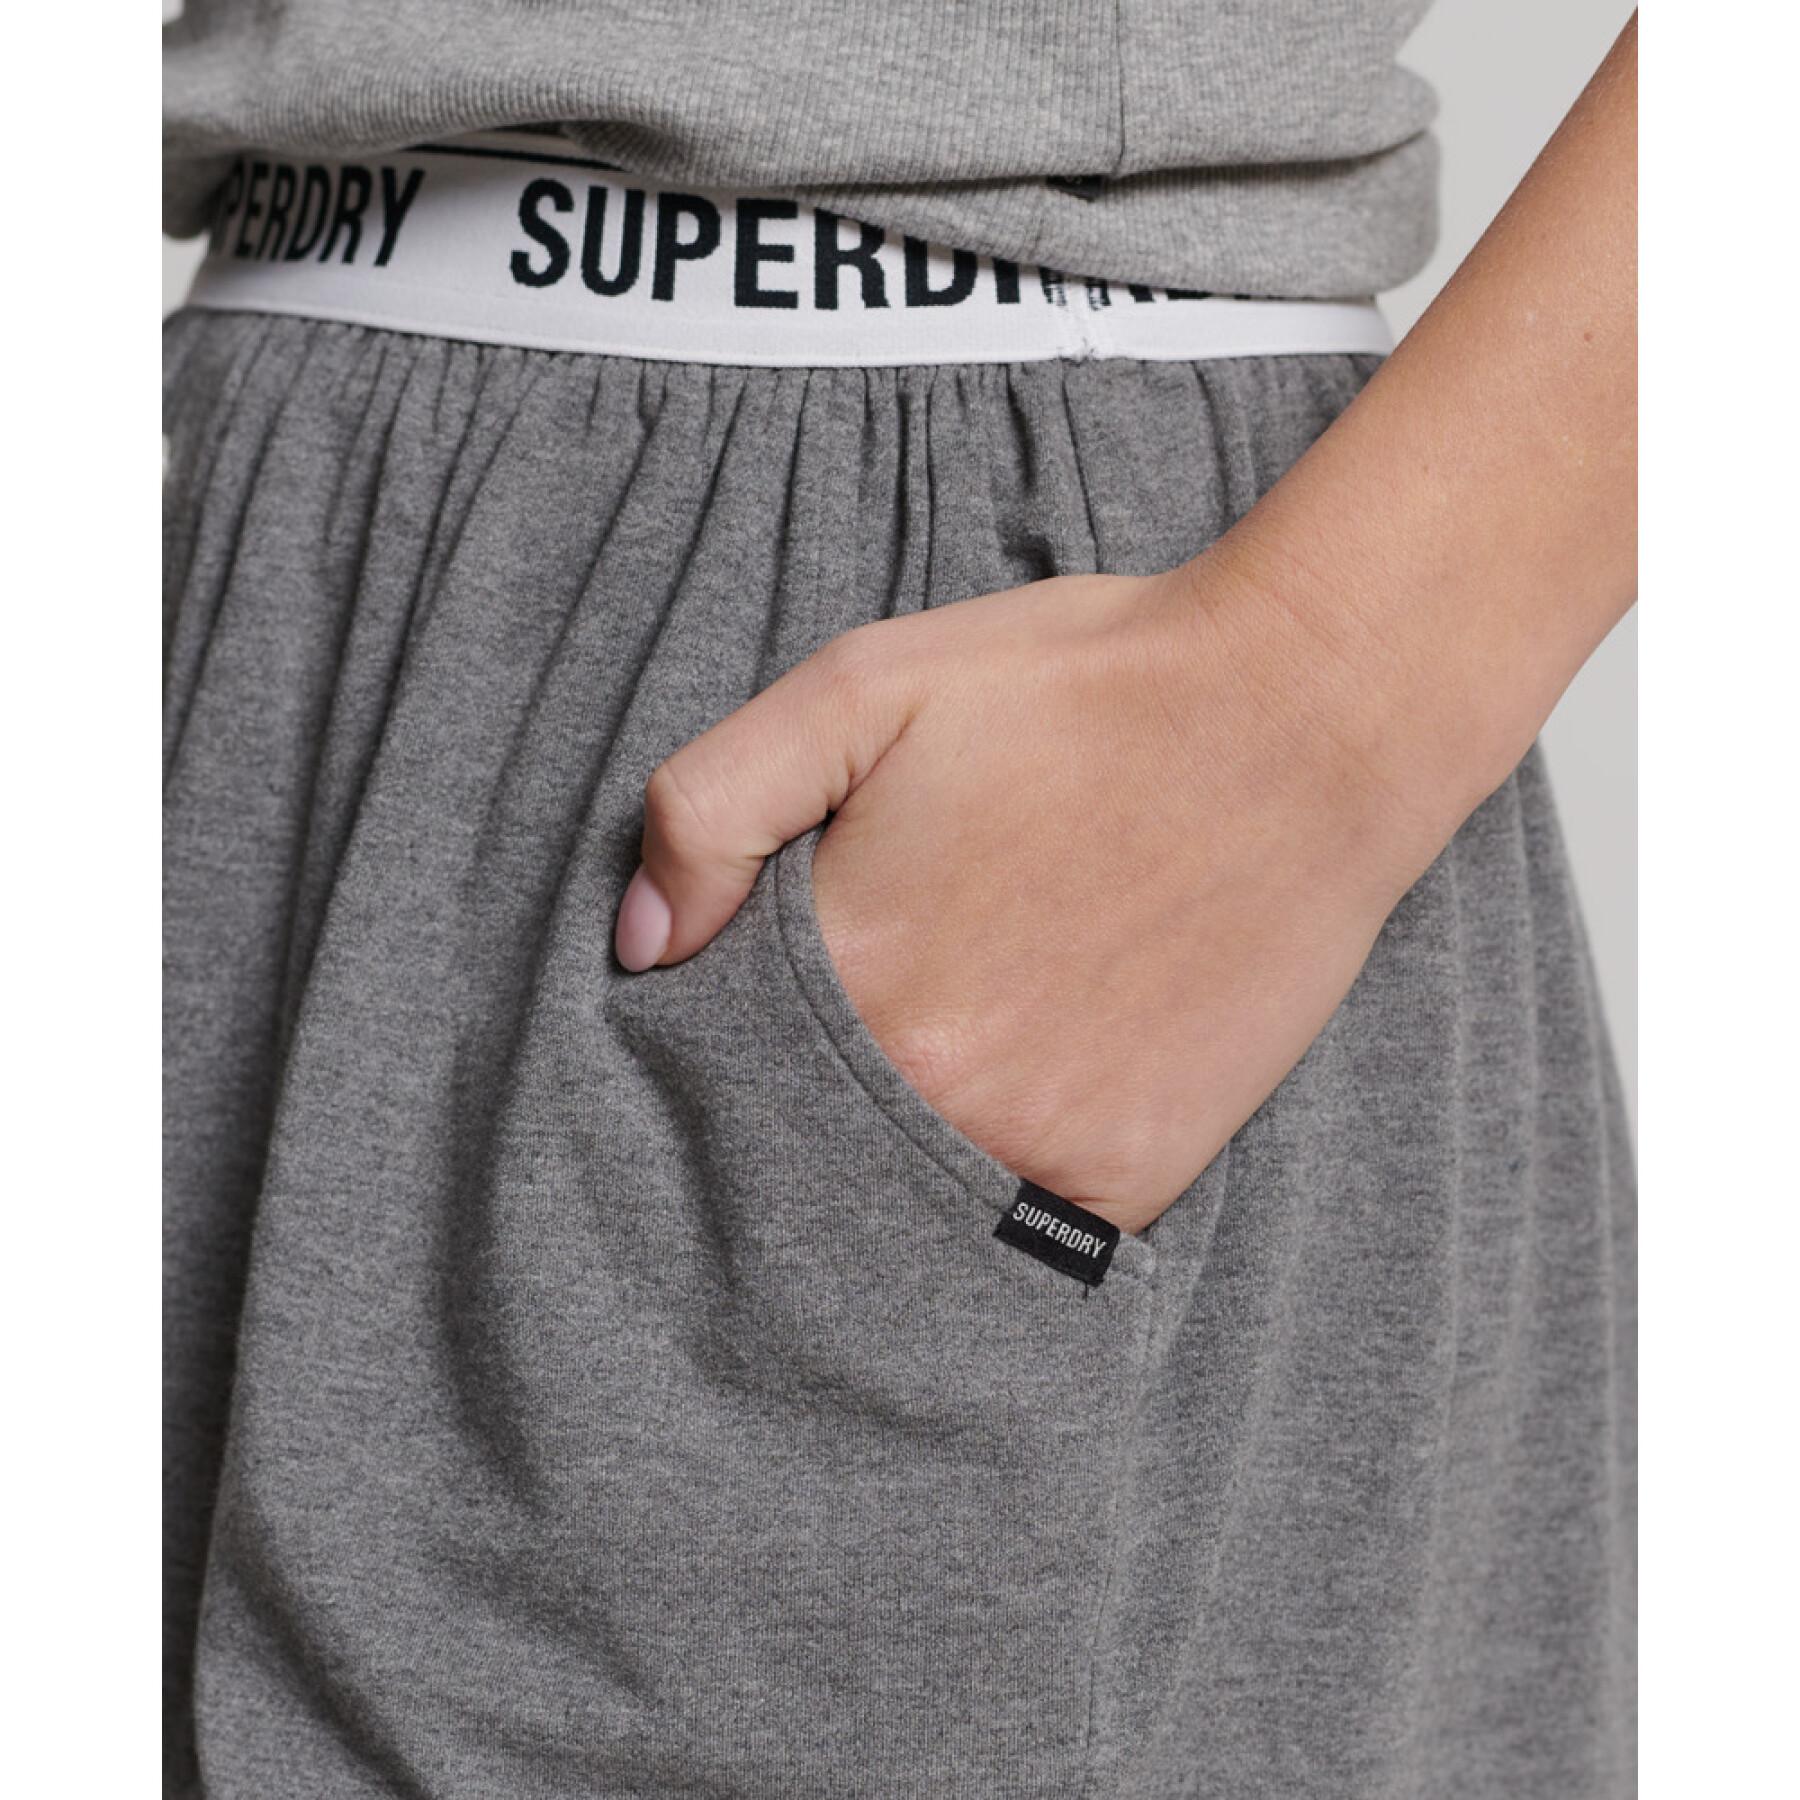 Dames shorts Superdry Pyjama